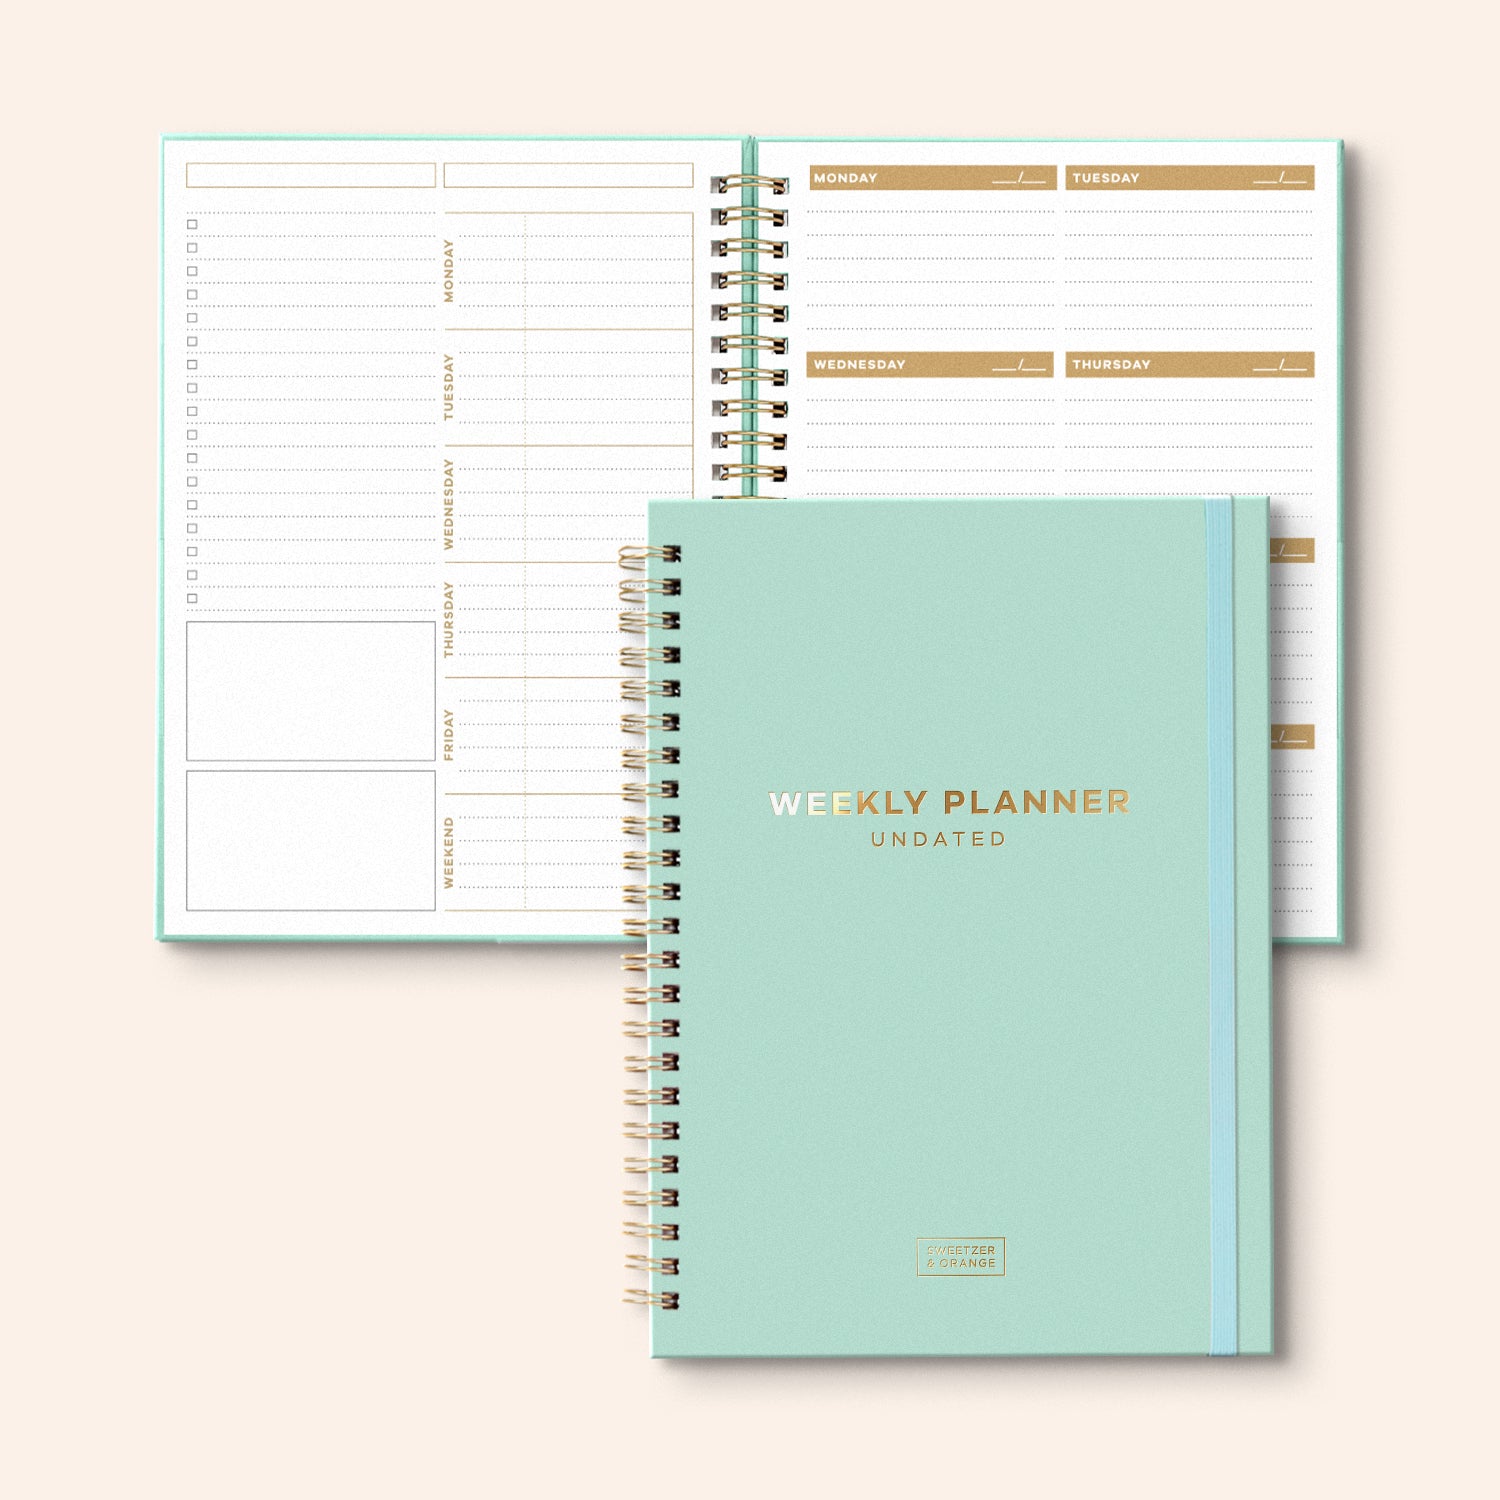 Flexible Weekly Planner Notebook